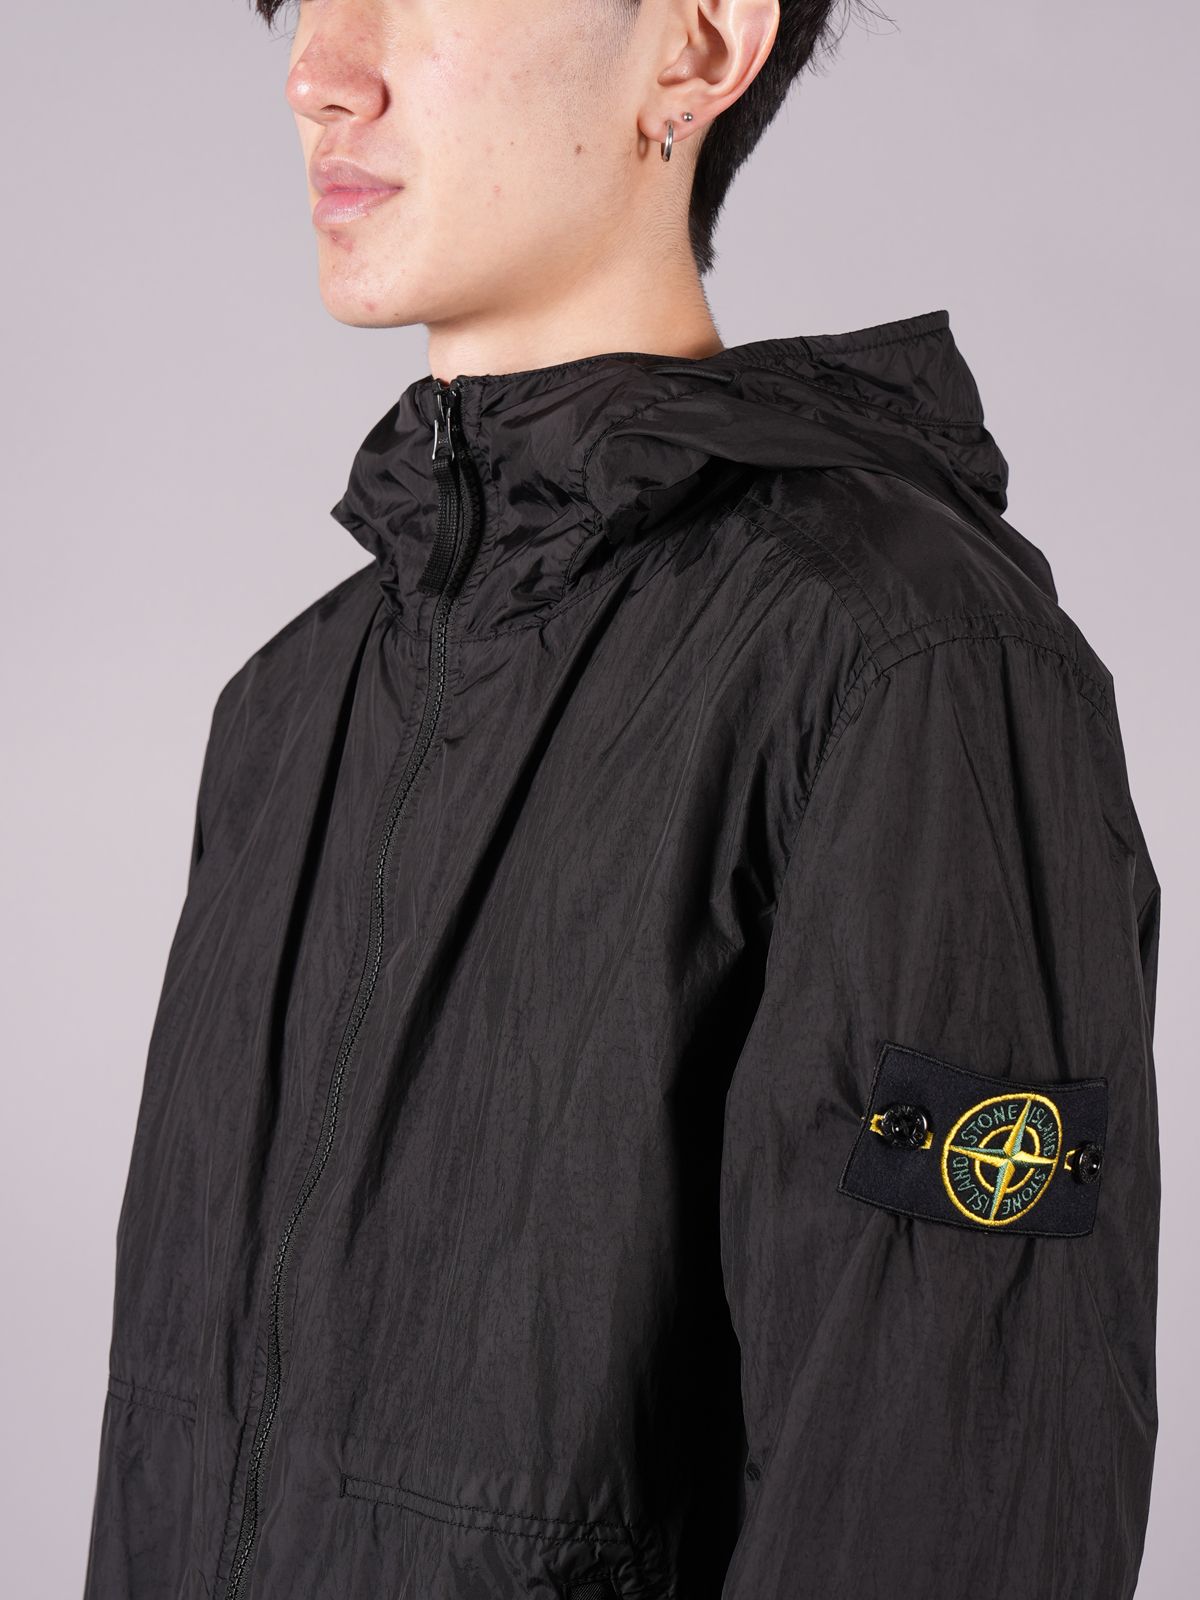 STONE ISLAND - 【ラスト1点】 40522 Crinkle Reps NY Hooded Jacket 